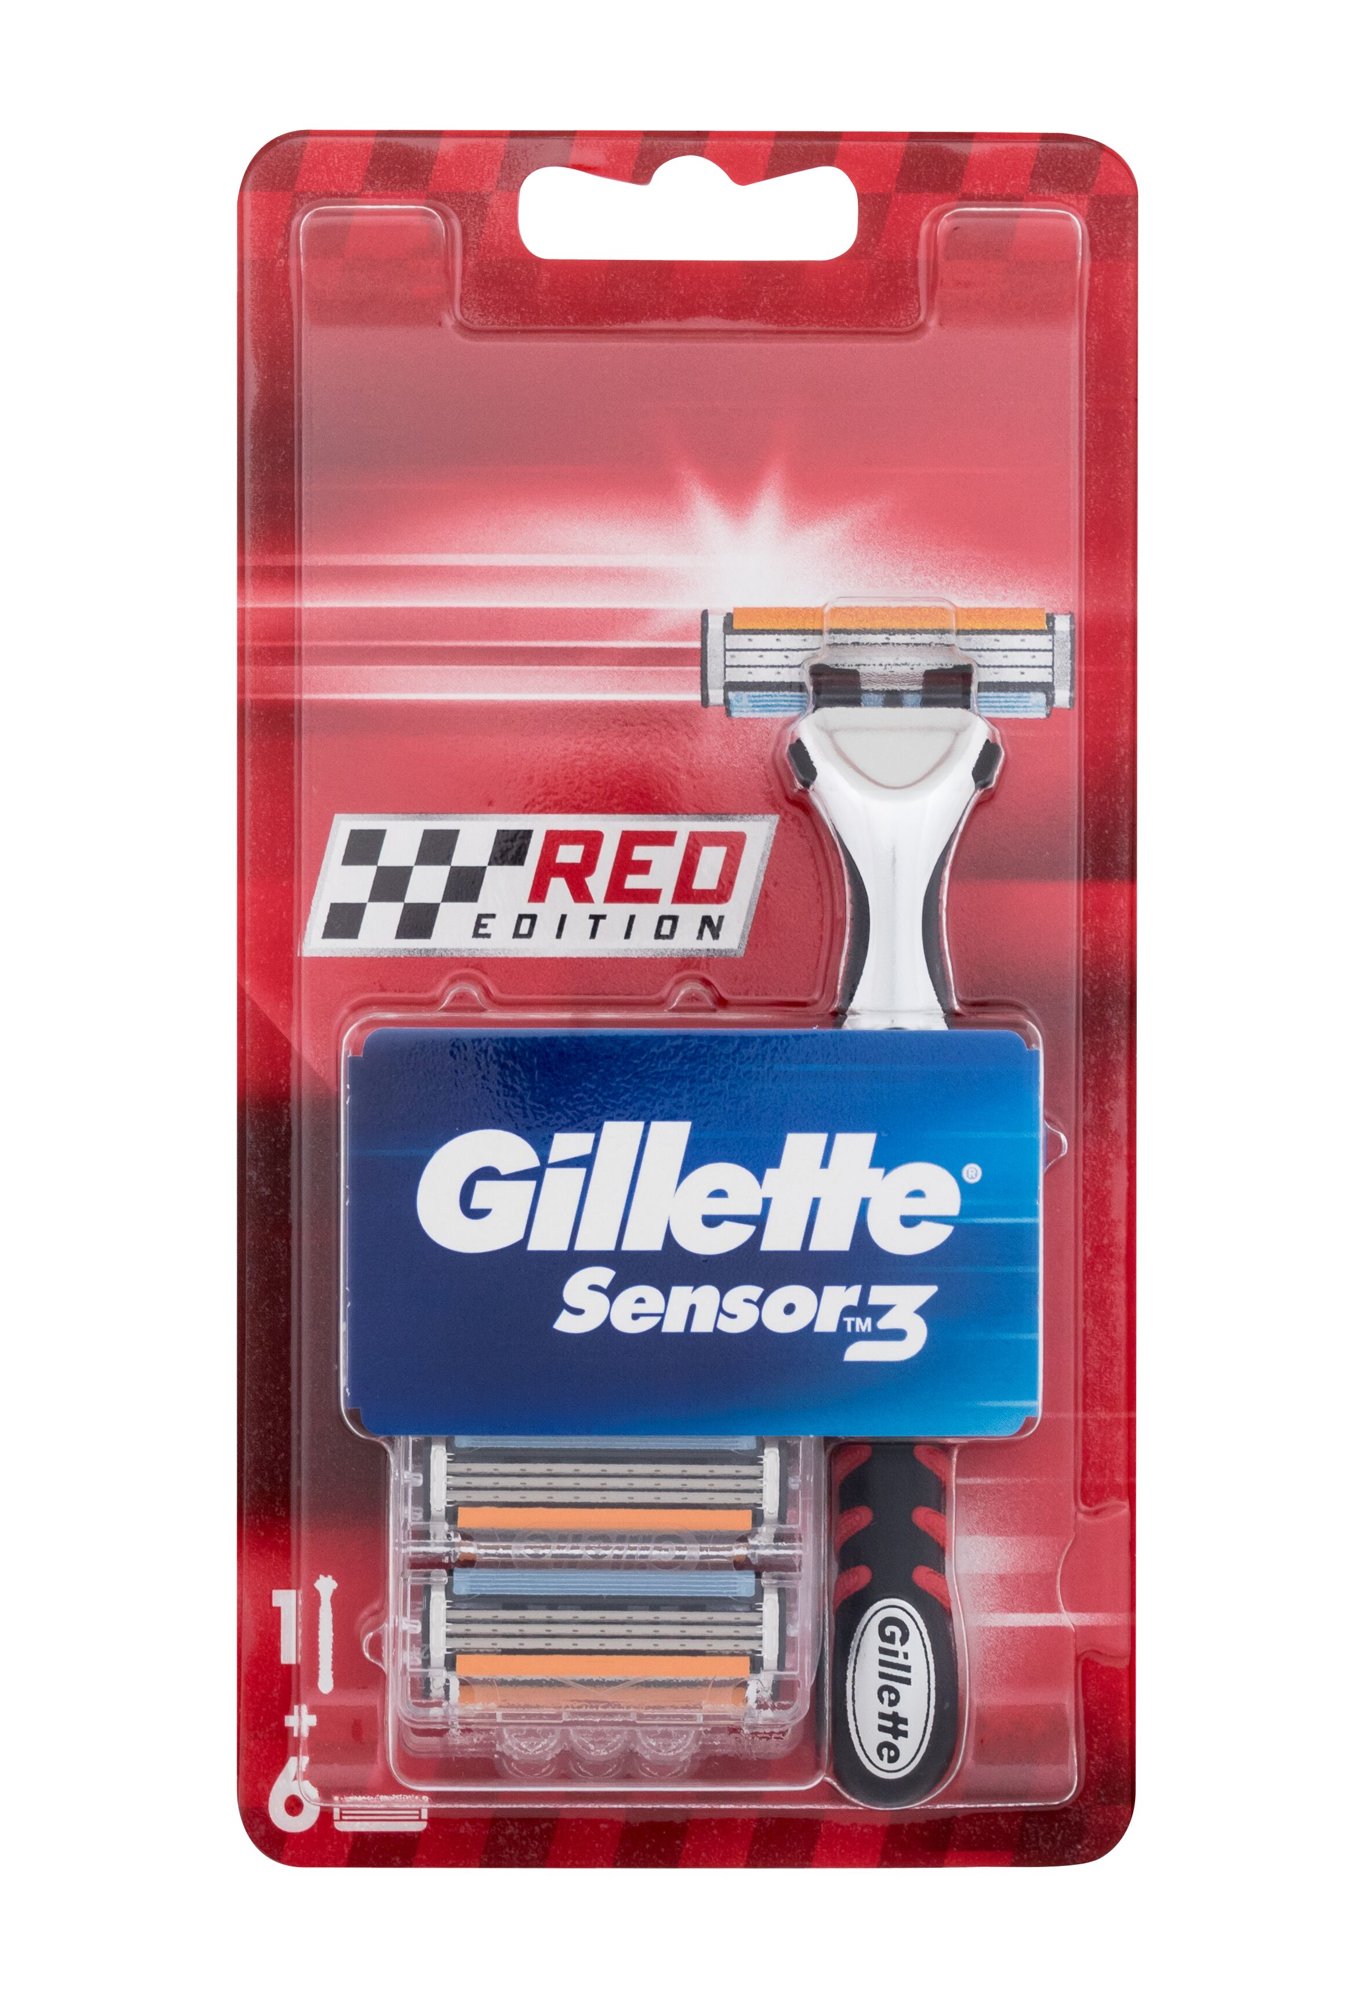 Gillette Sensor3 Red Edition skustuvas